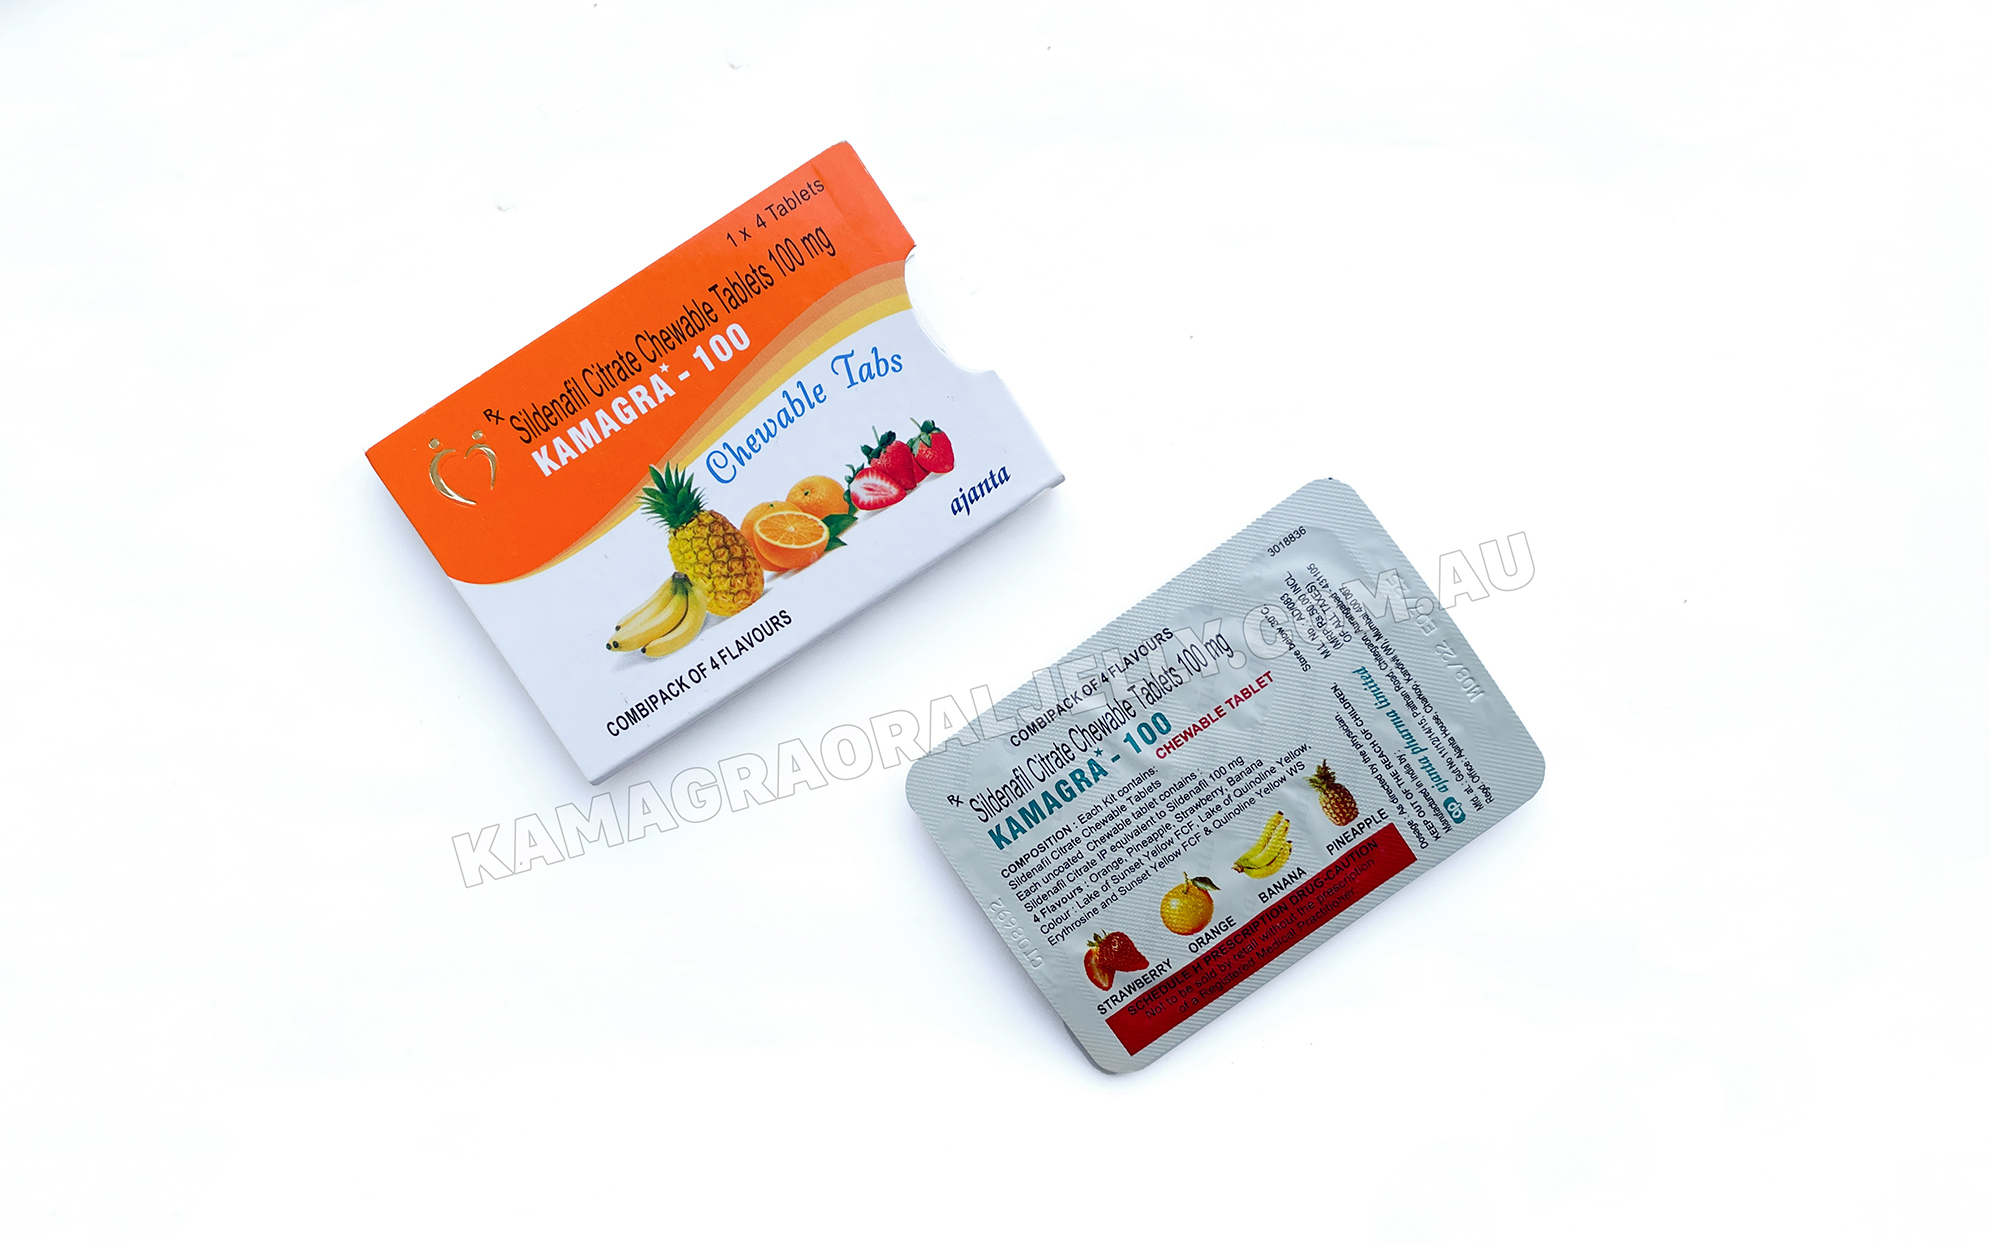 Kamagra Soft Chewable Tablets